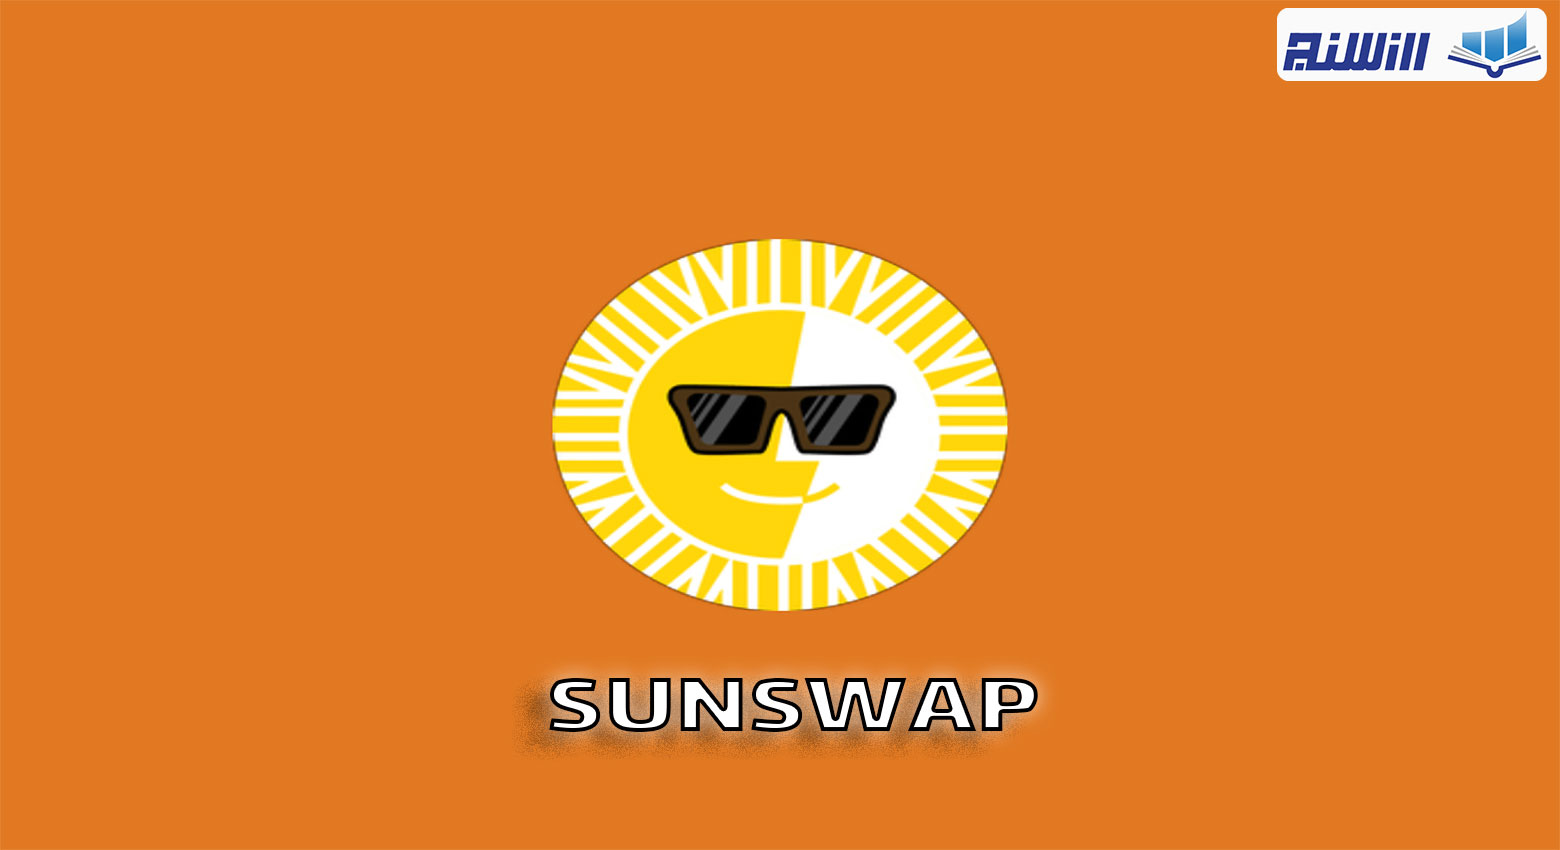 نحوه کار با پلتفرم Sunswap